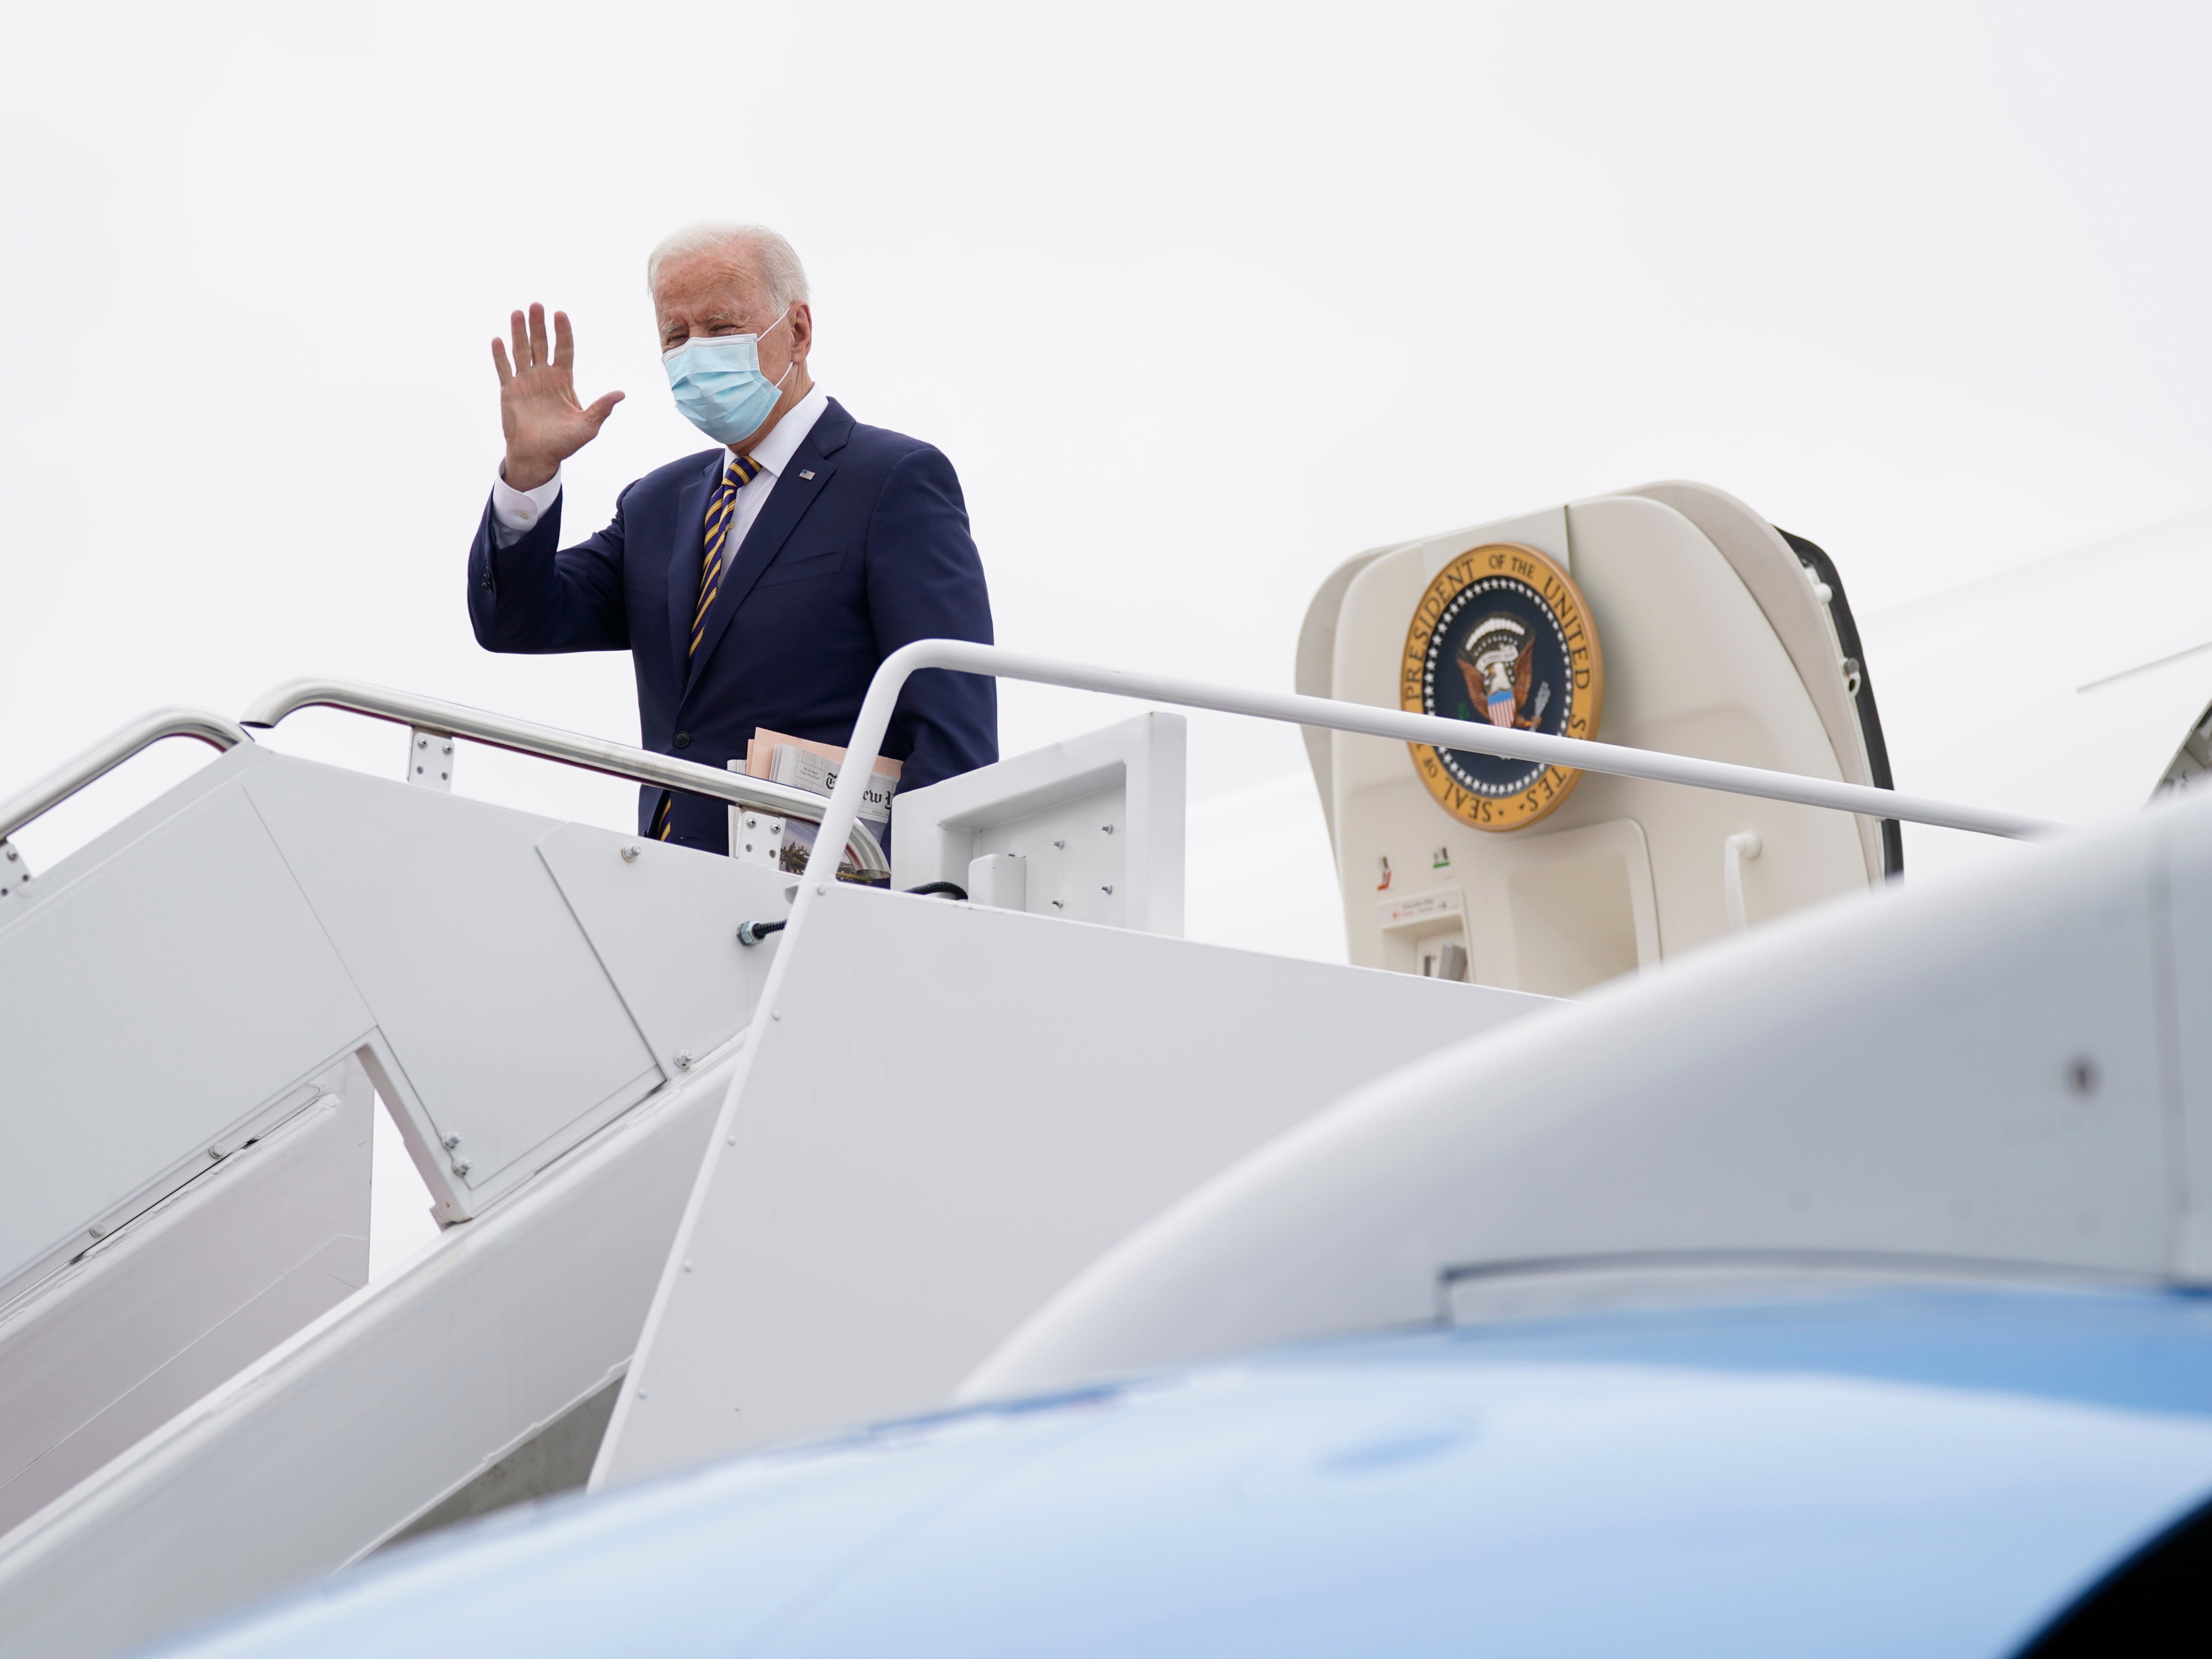 Joe Biden exits Air Force One